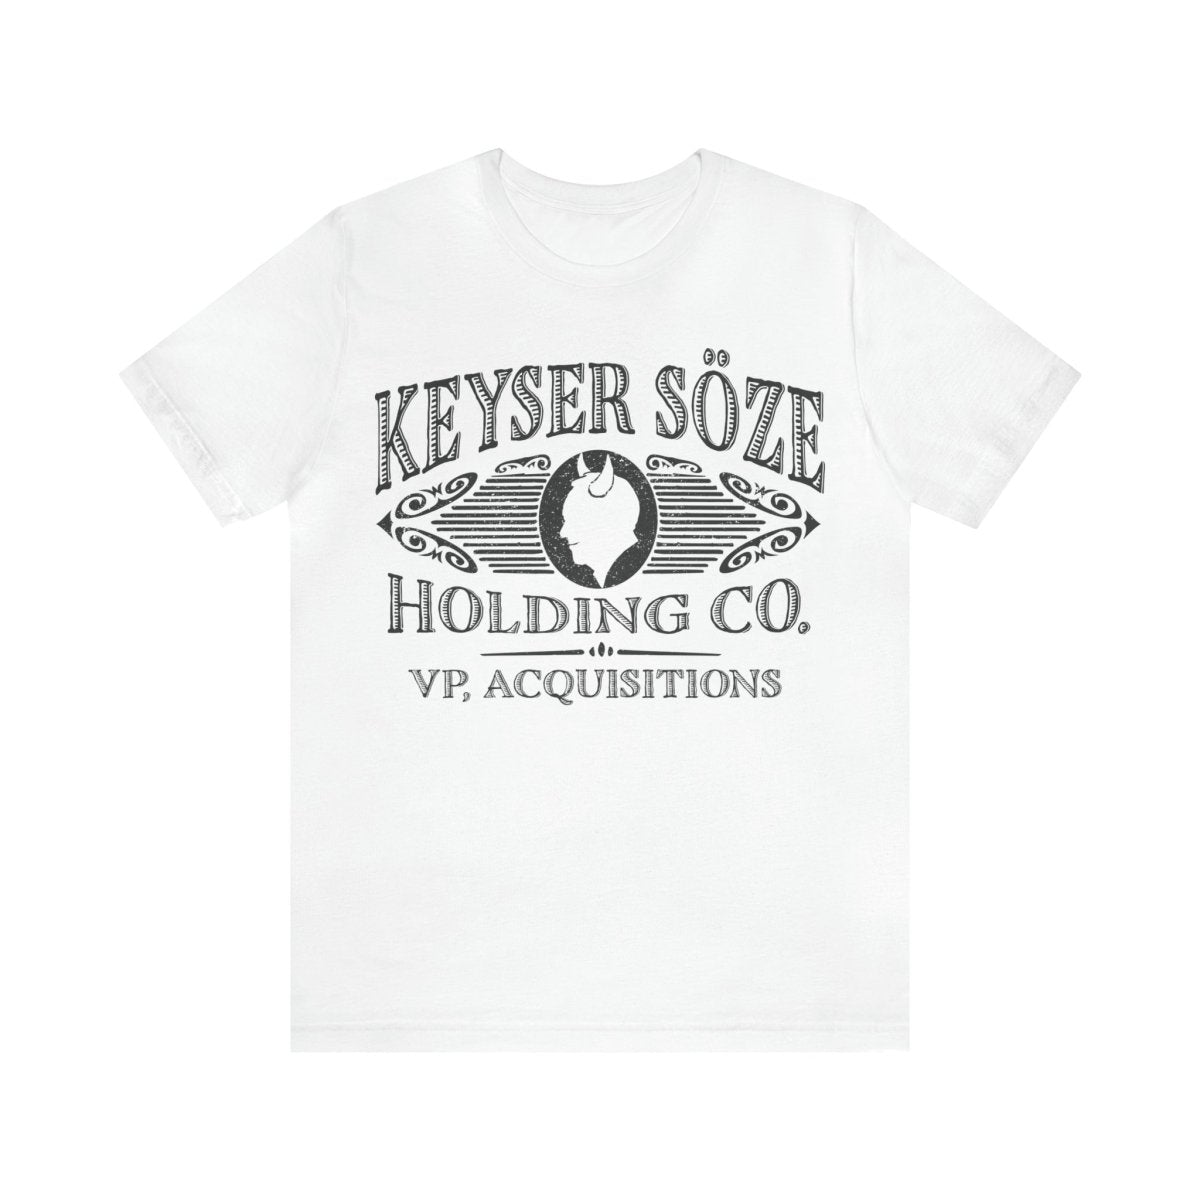 Keyser Soze Premium T-Shirt, VP Acquisitions, Tricky Devil, Criminal Mastermind, Villain, Corporate Gift